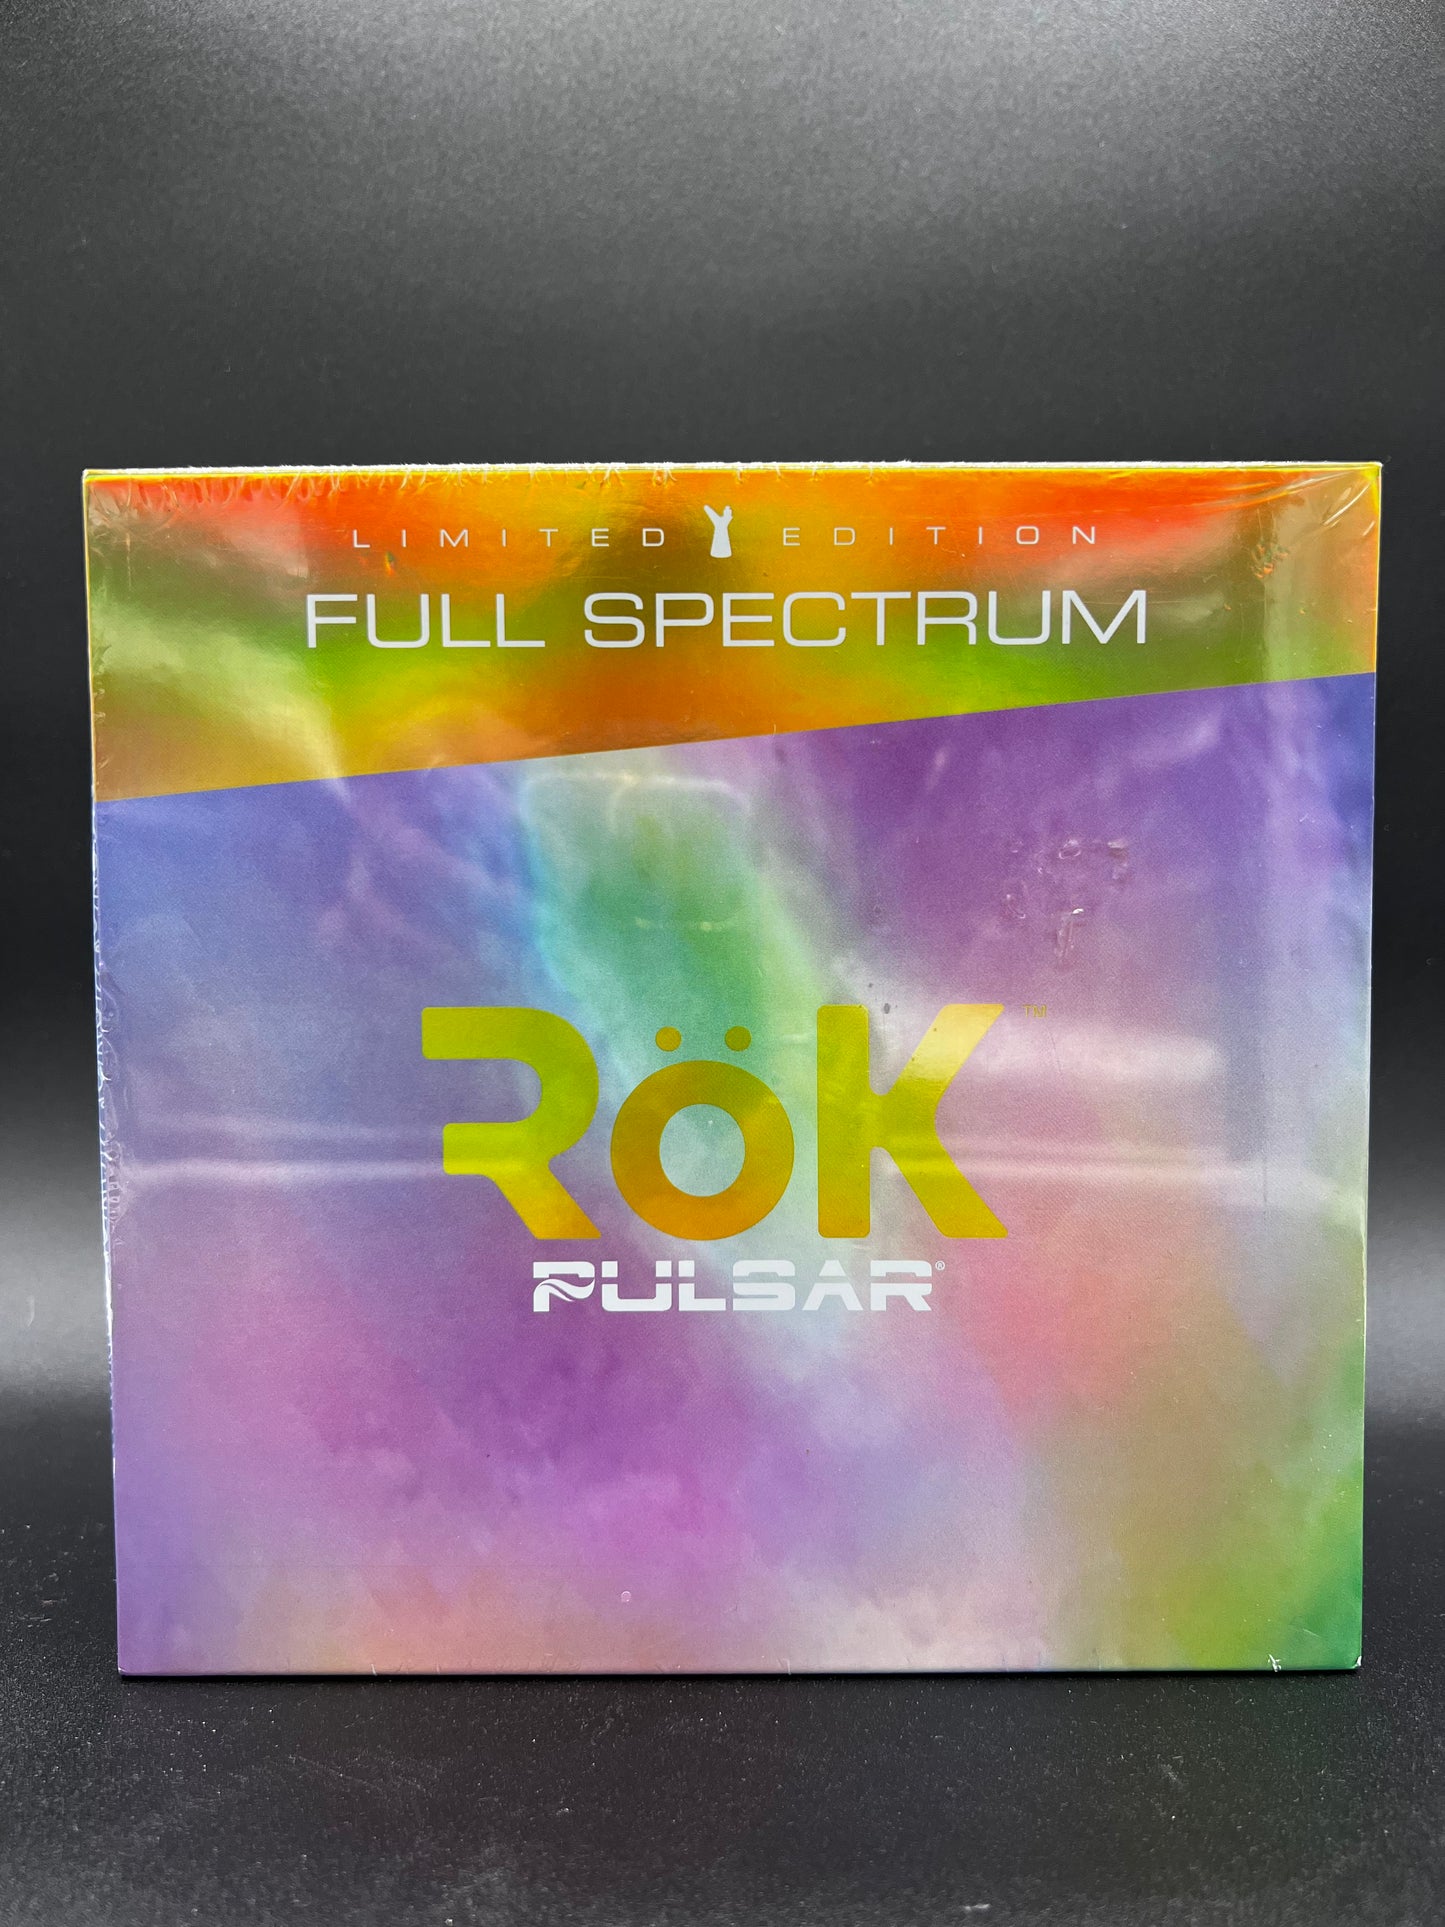 Pulsar Rok full spectrum vaporizer